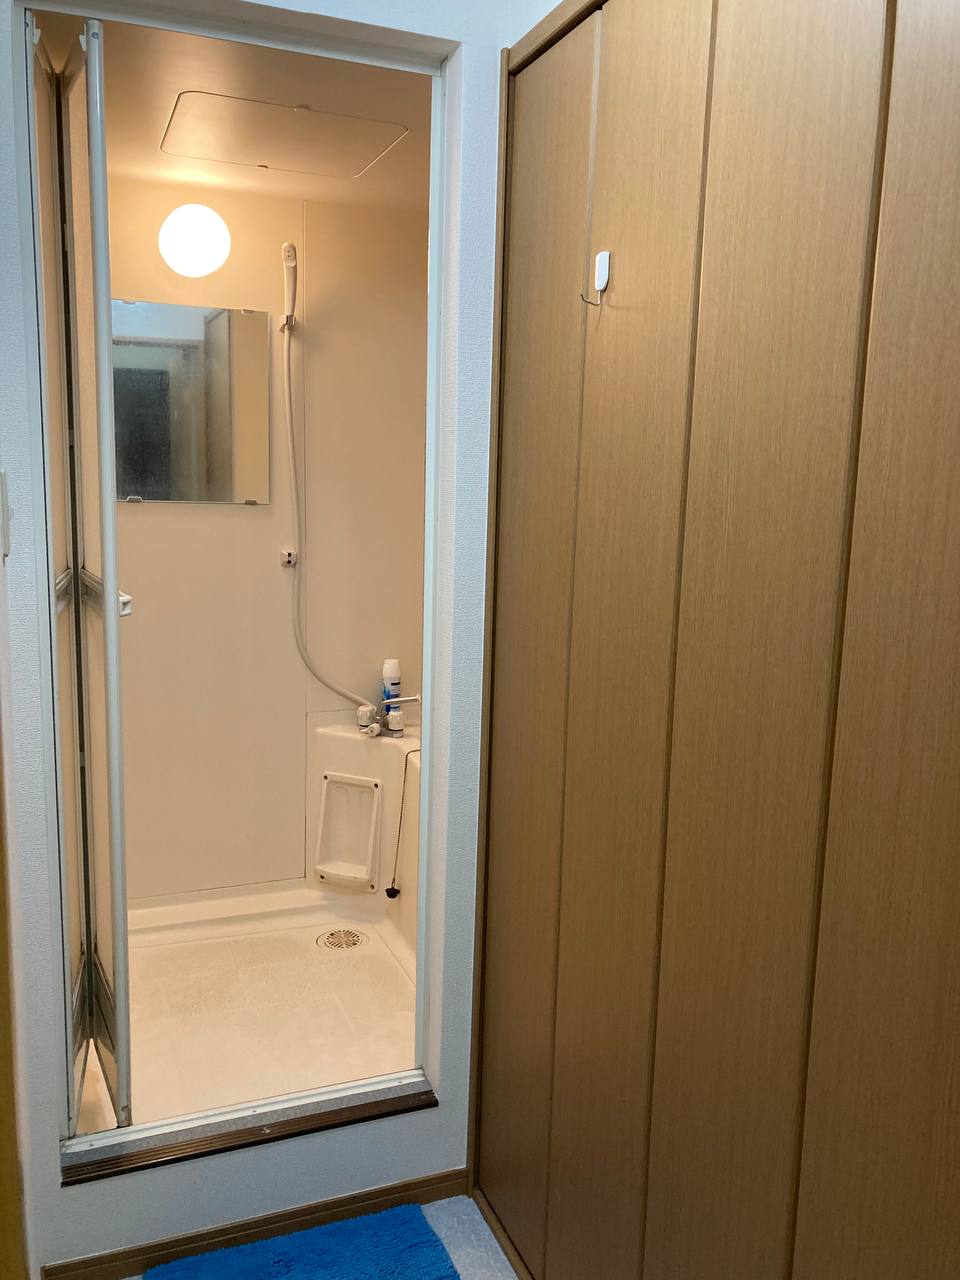 shower room (shared)